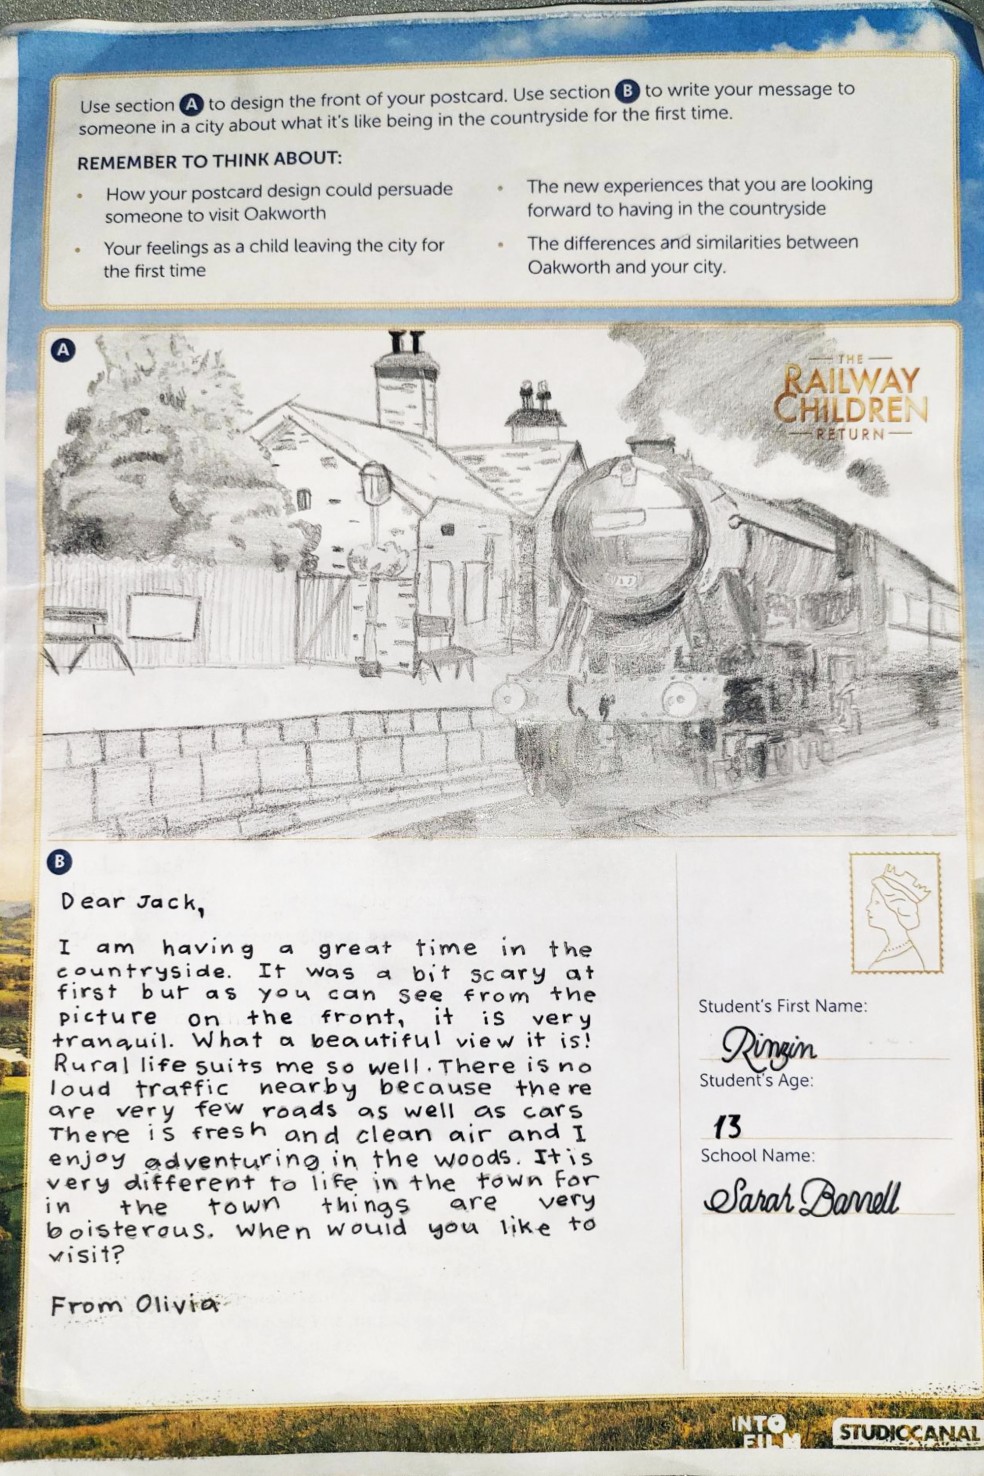 The Railway Children Return Historic Postcard Competition - Winning Entry